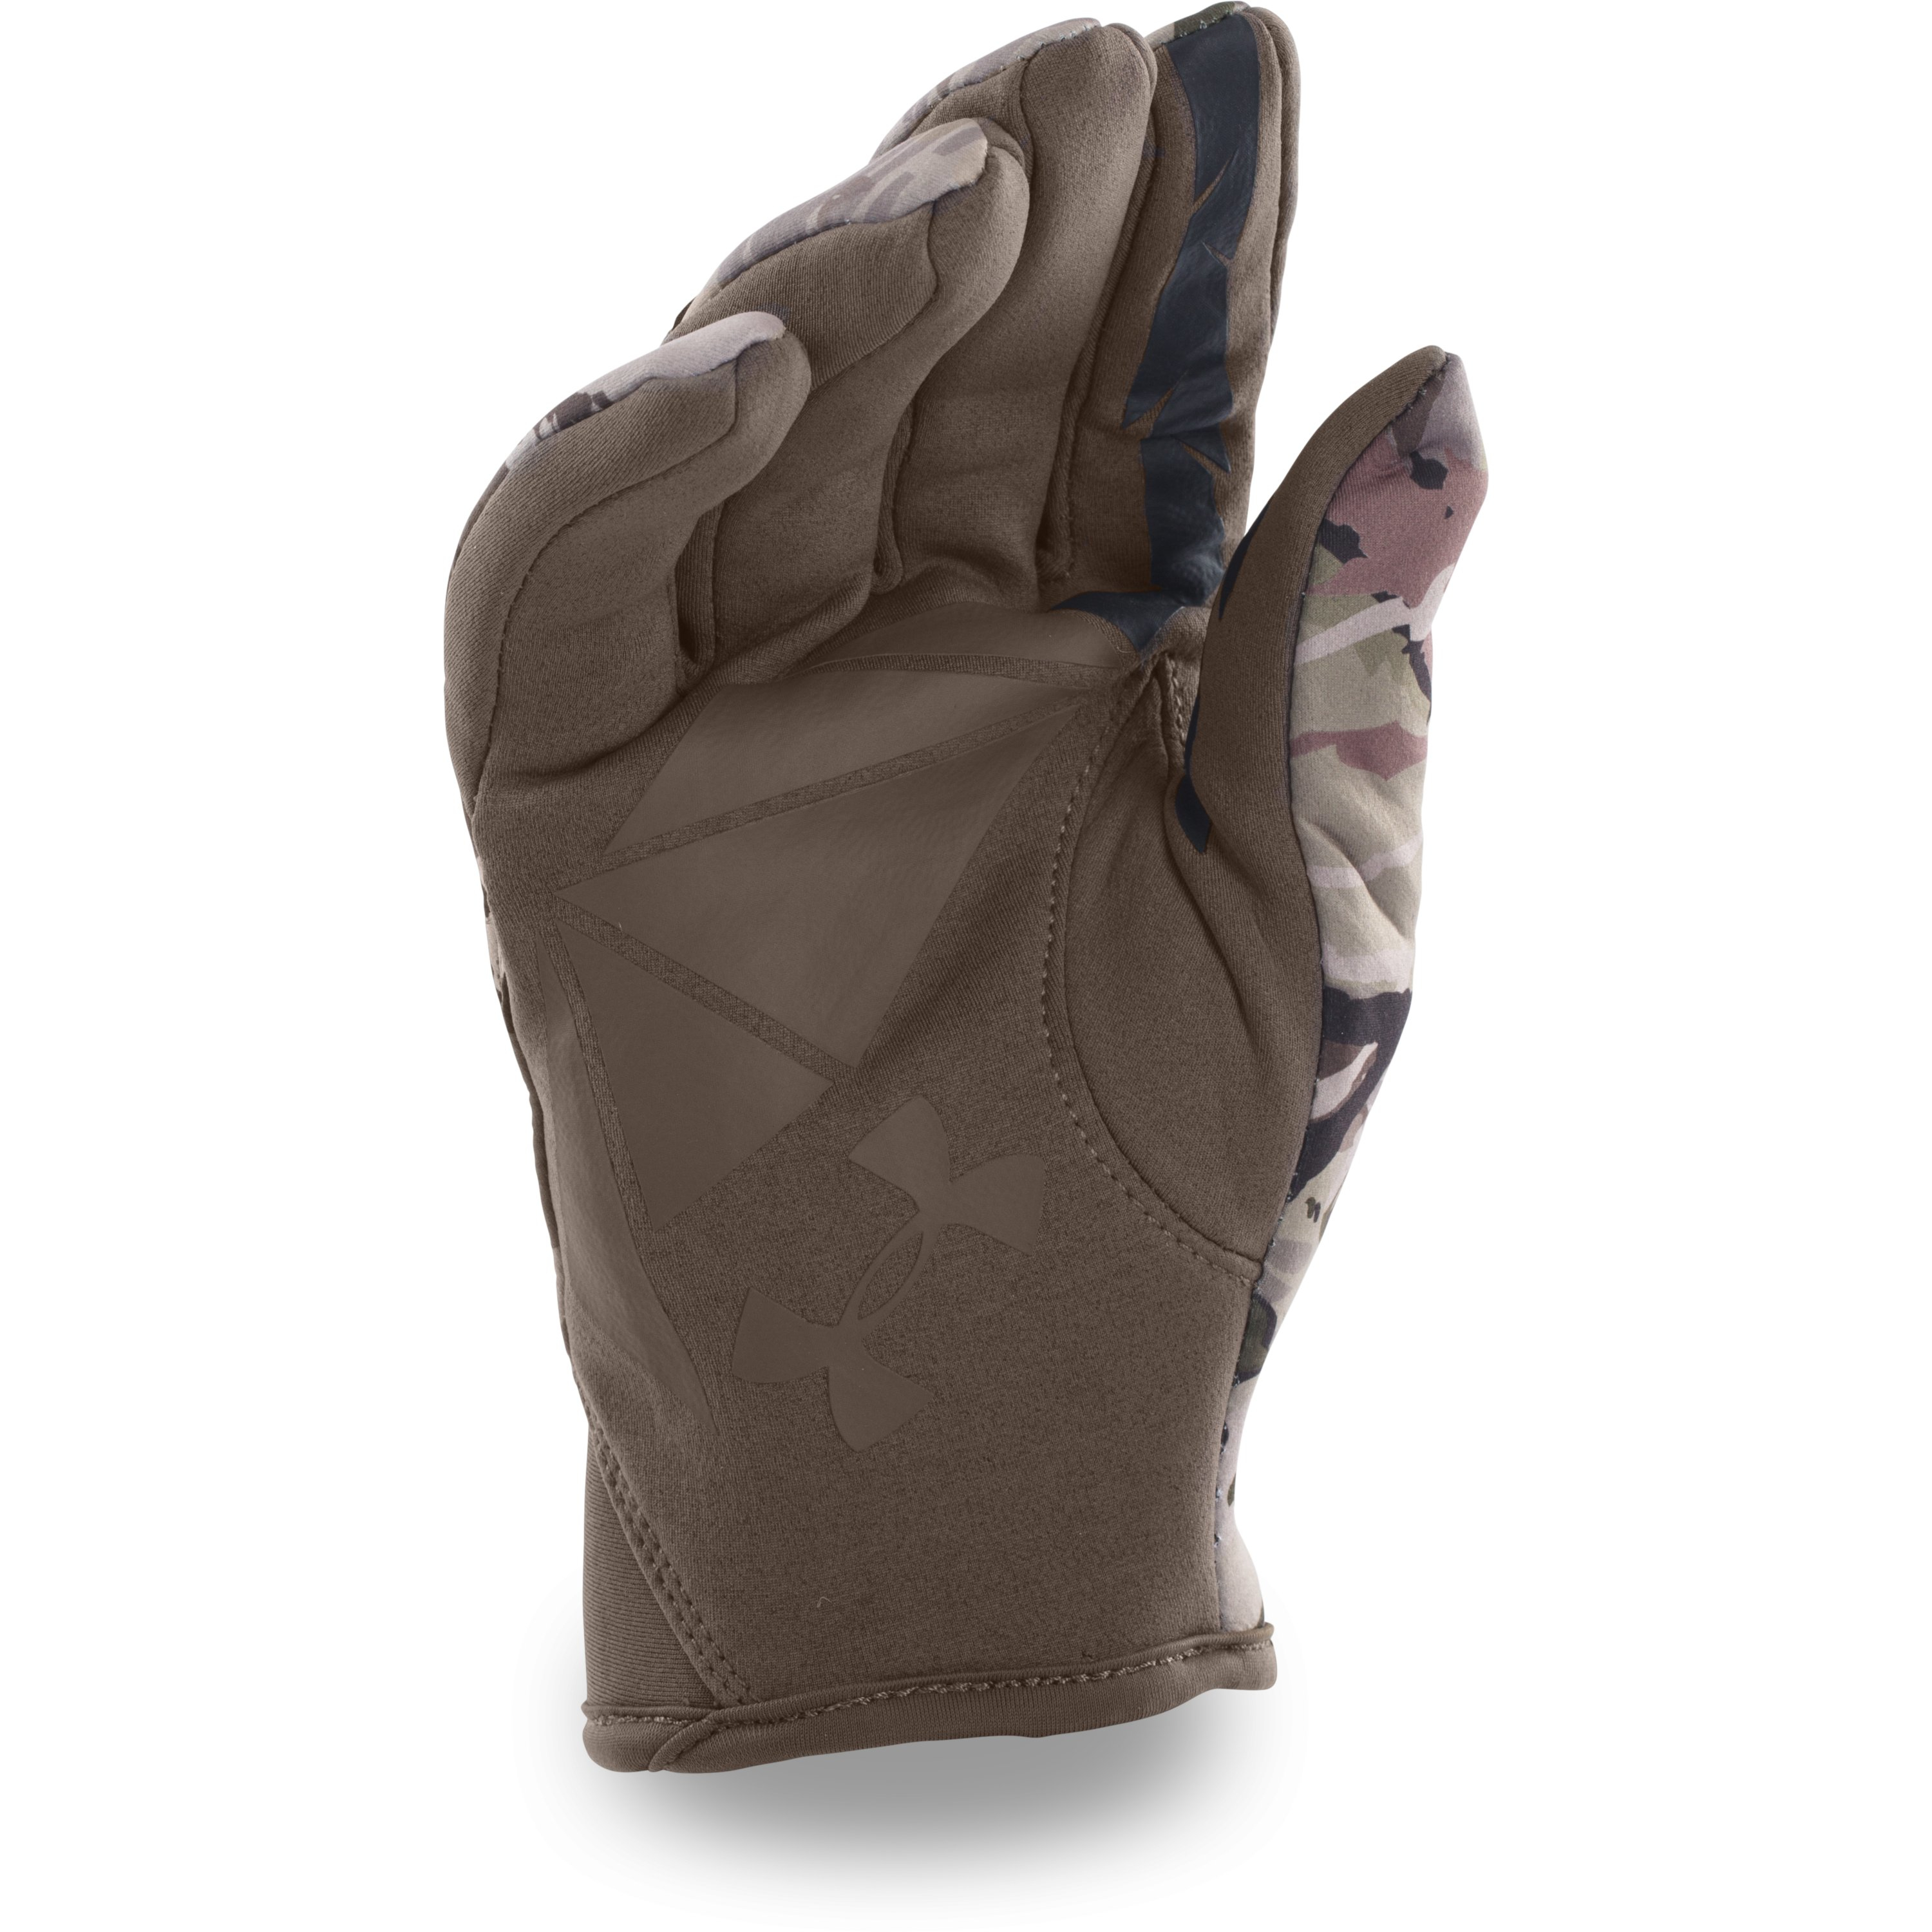 3 Colors Under Armour Men's Speed Freak Wool Gloves 